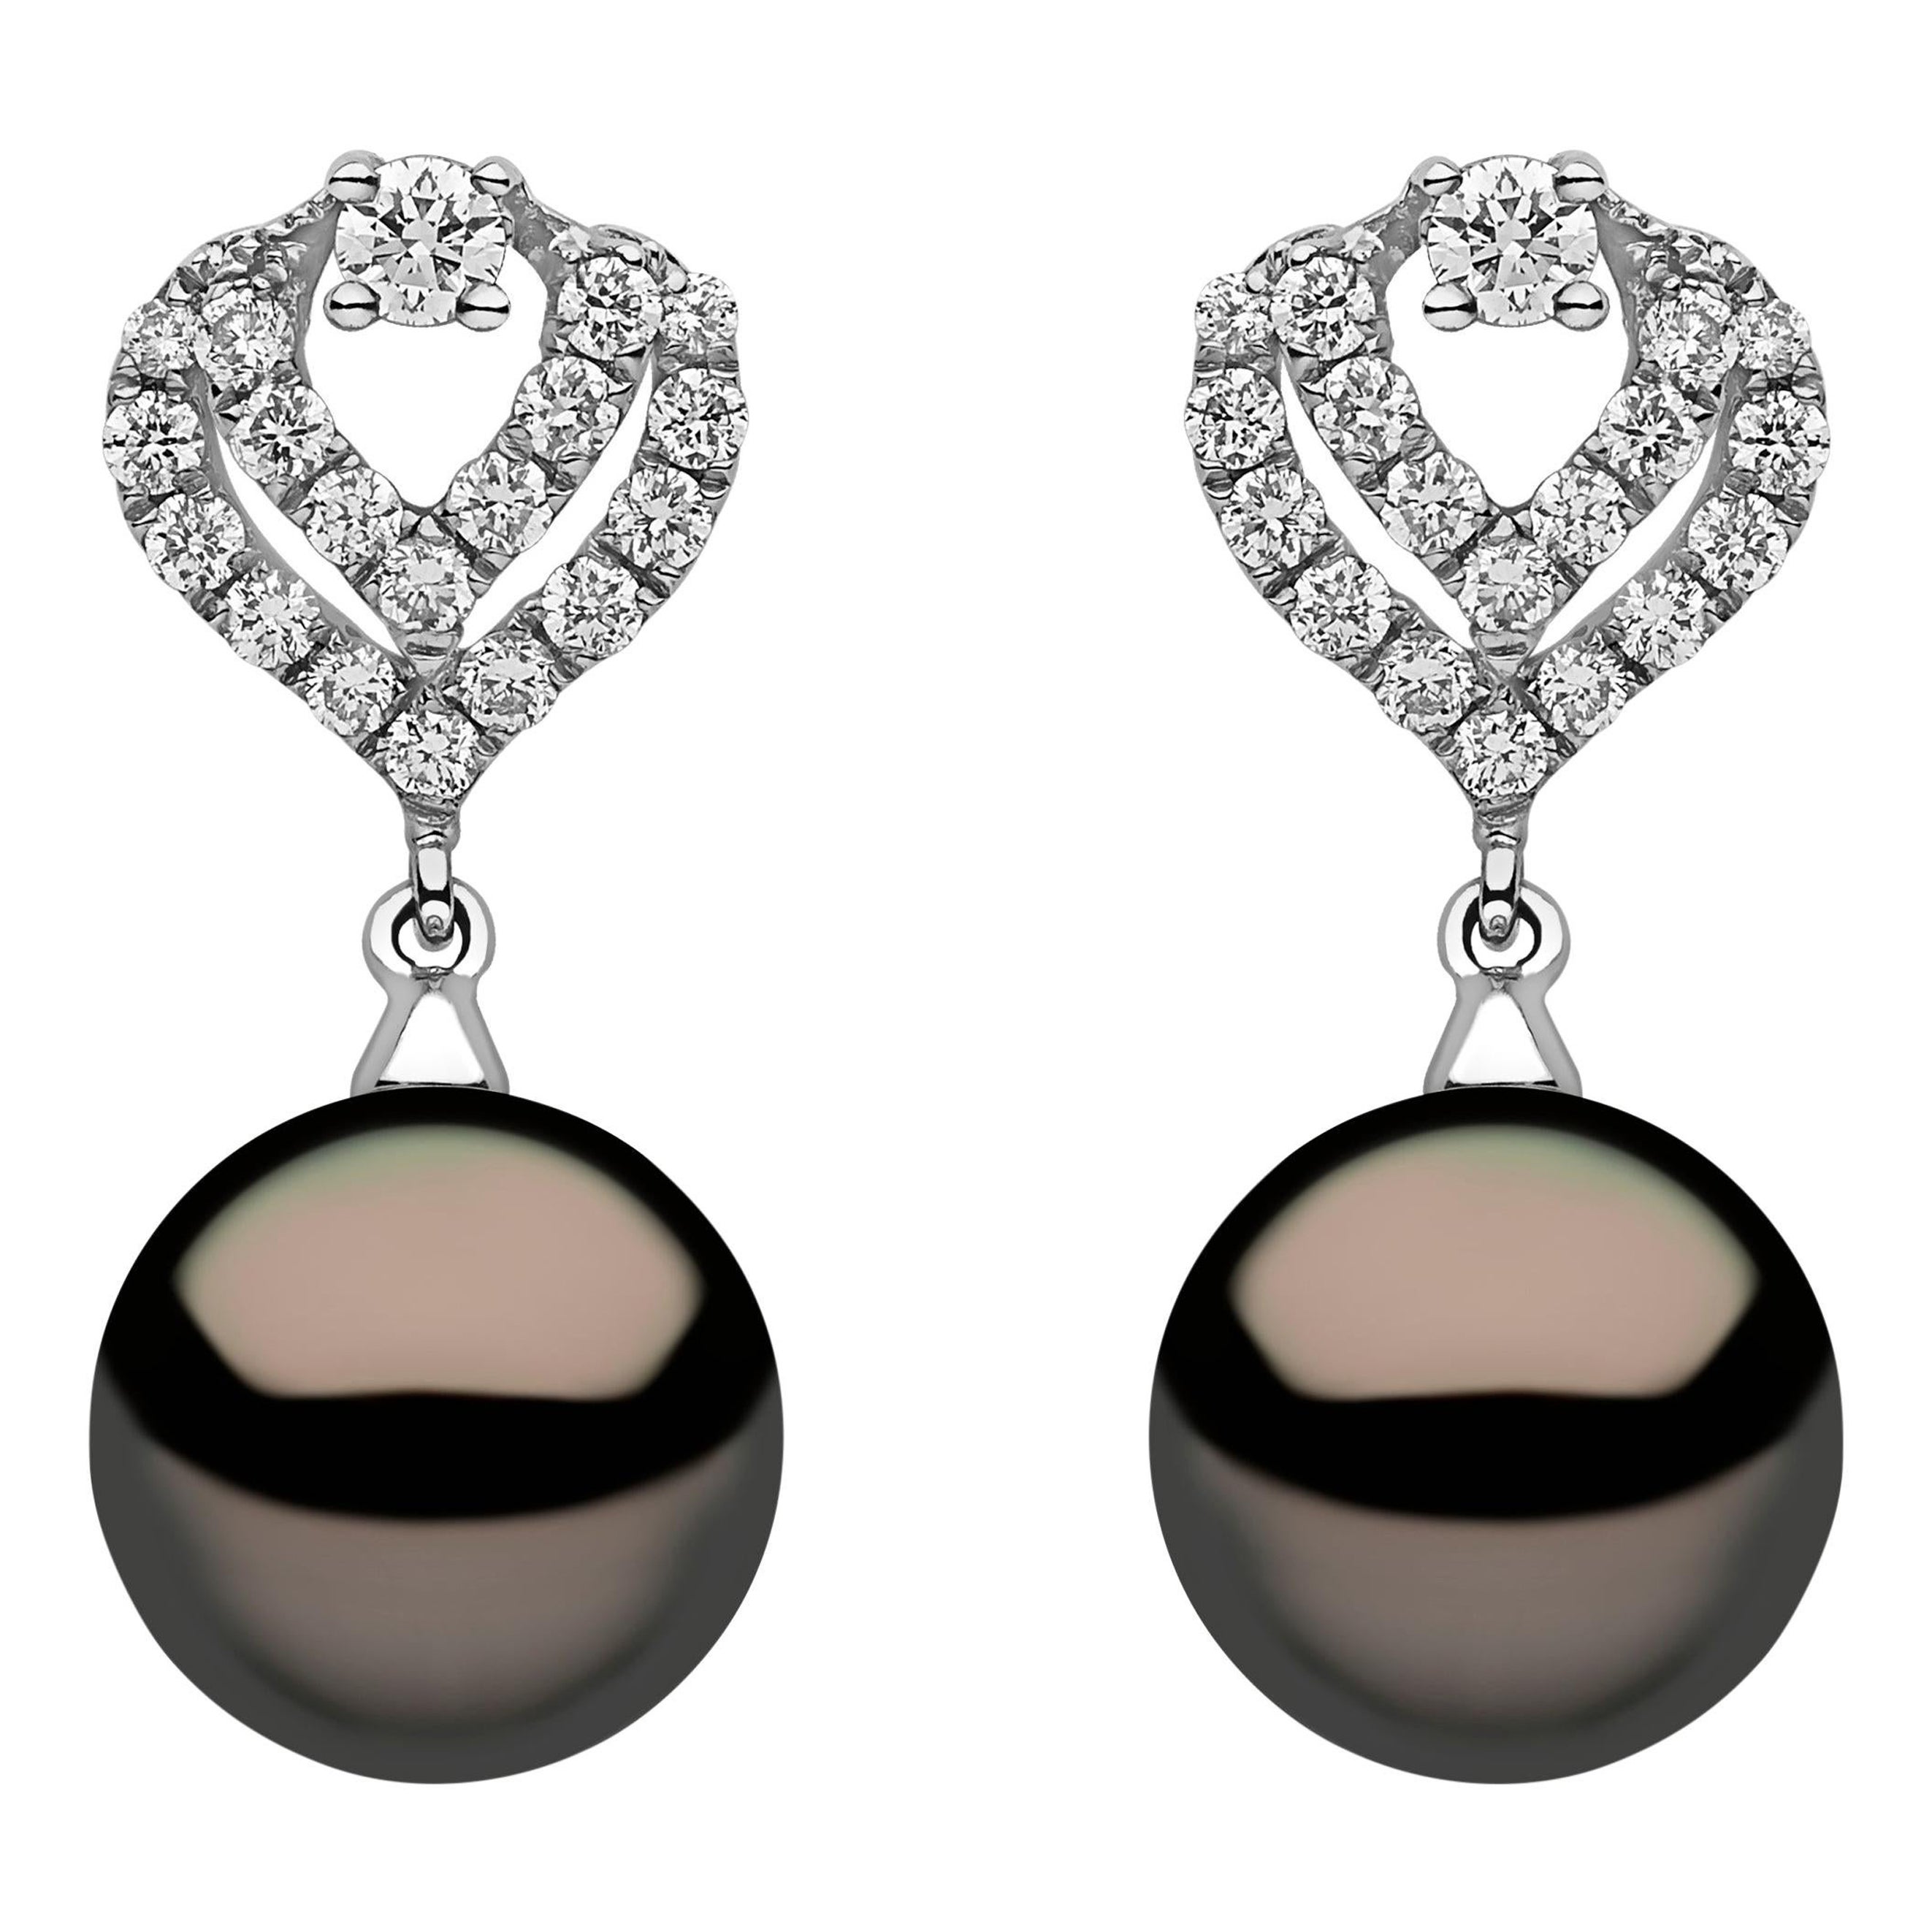 Yoko London Tahitian Pearl and Diamond Earrings in 18k White Gold